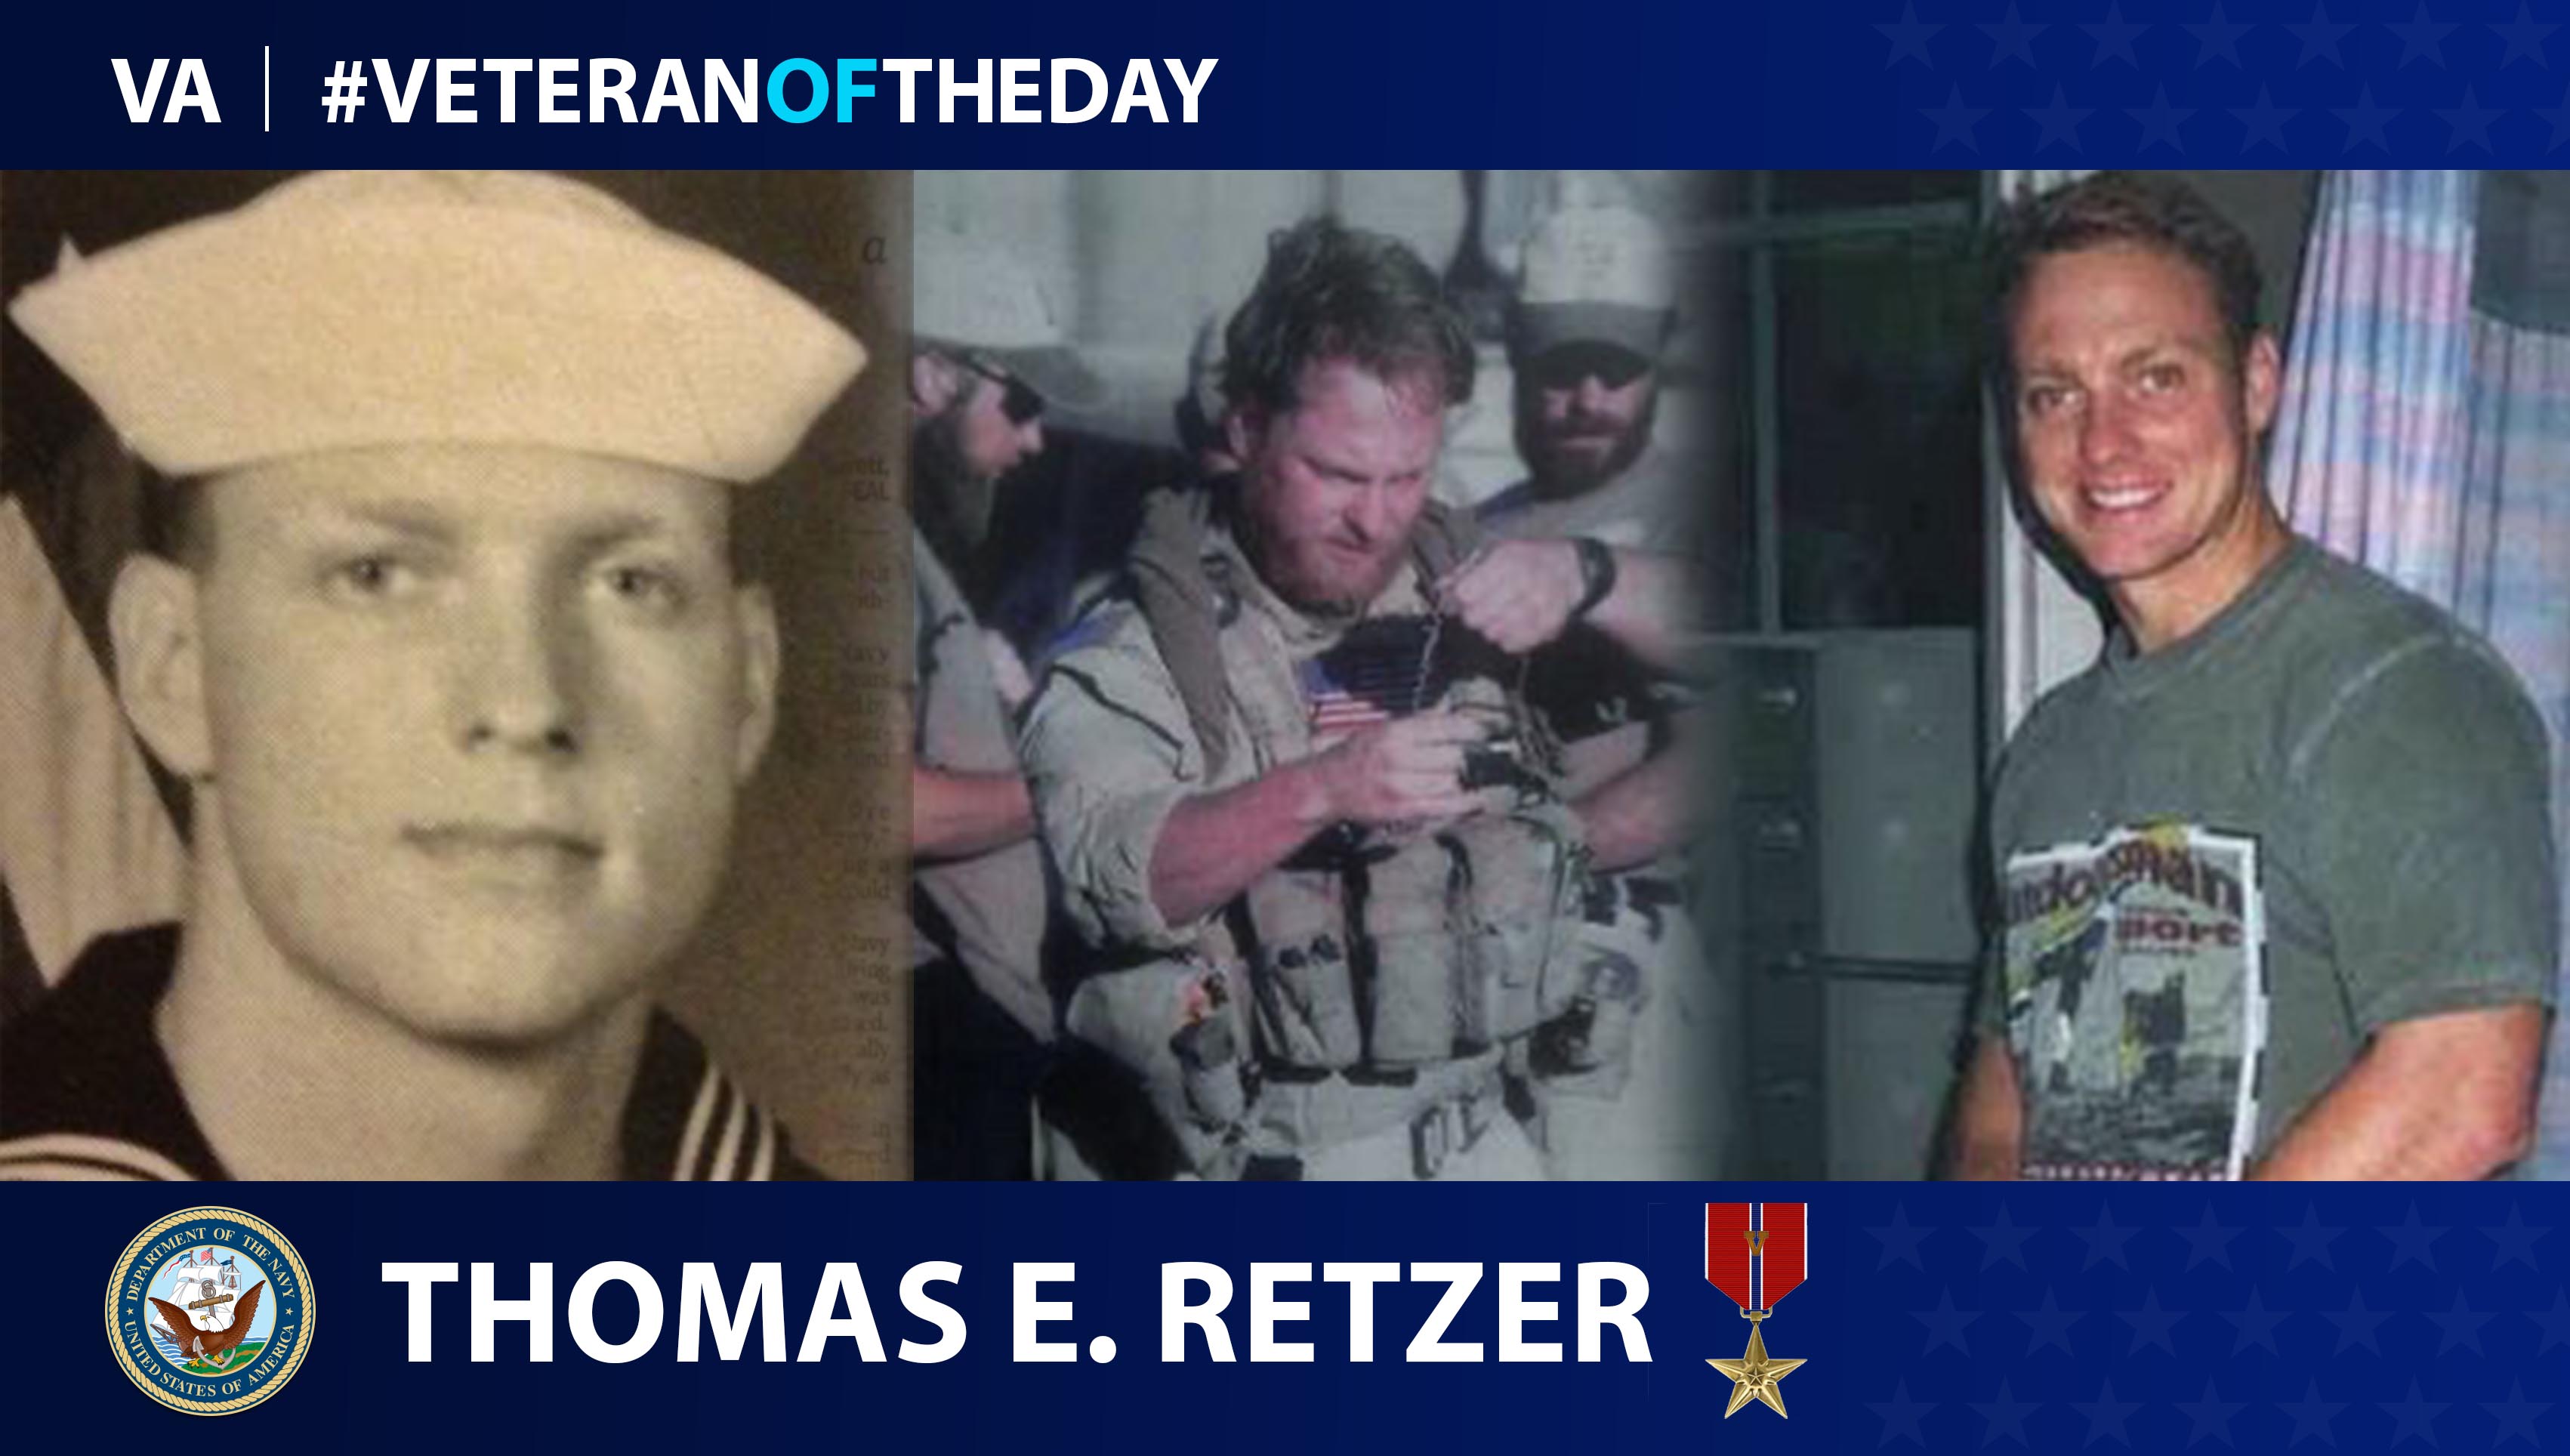 Navy Veteran Thomas Retzer is today's Veteran of the Day.